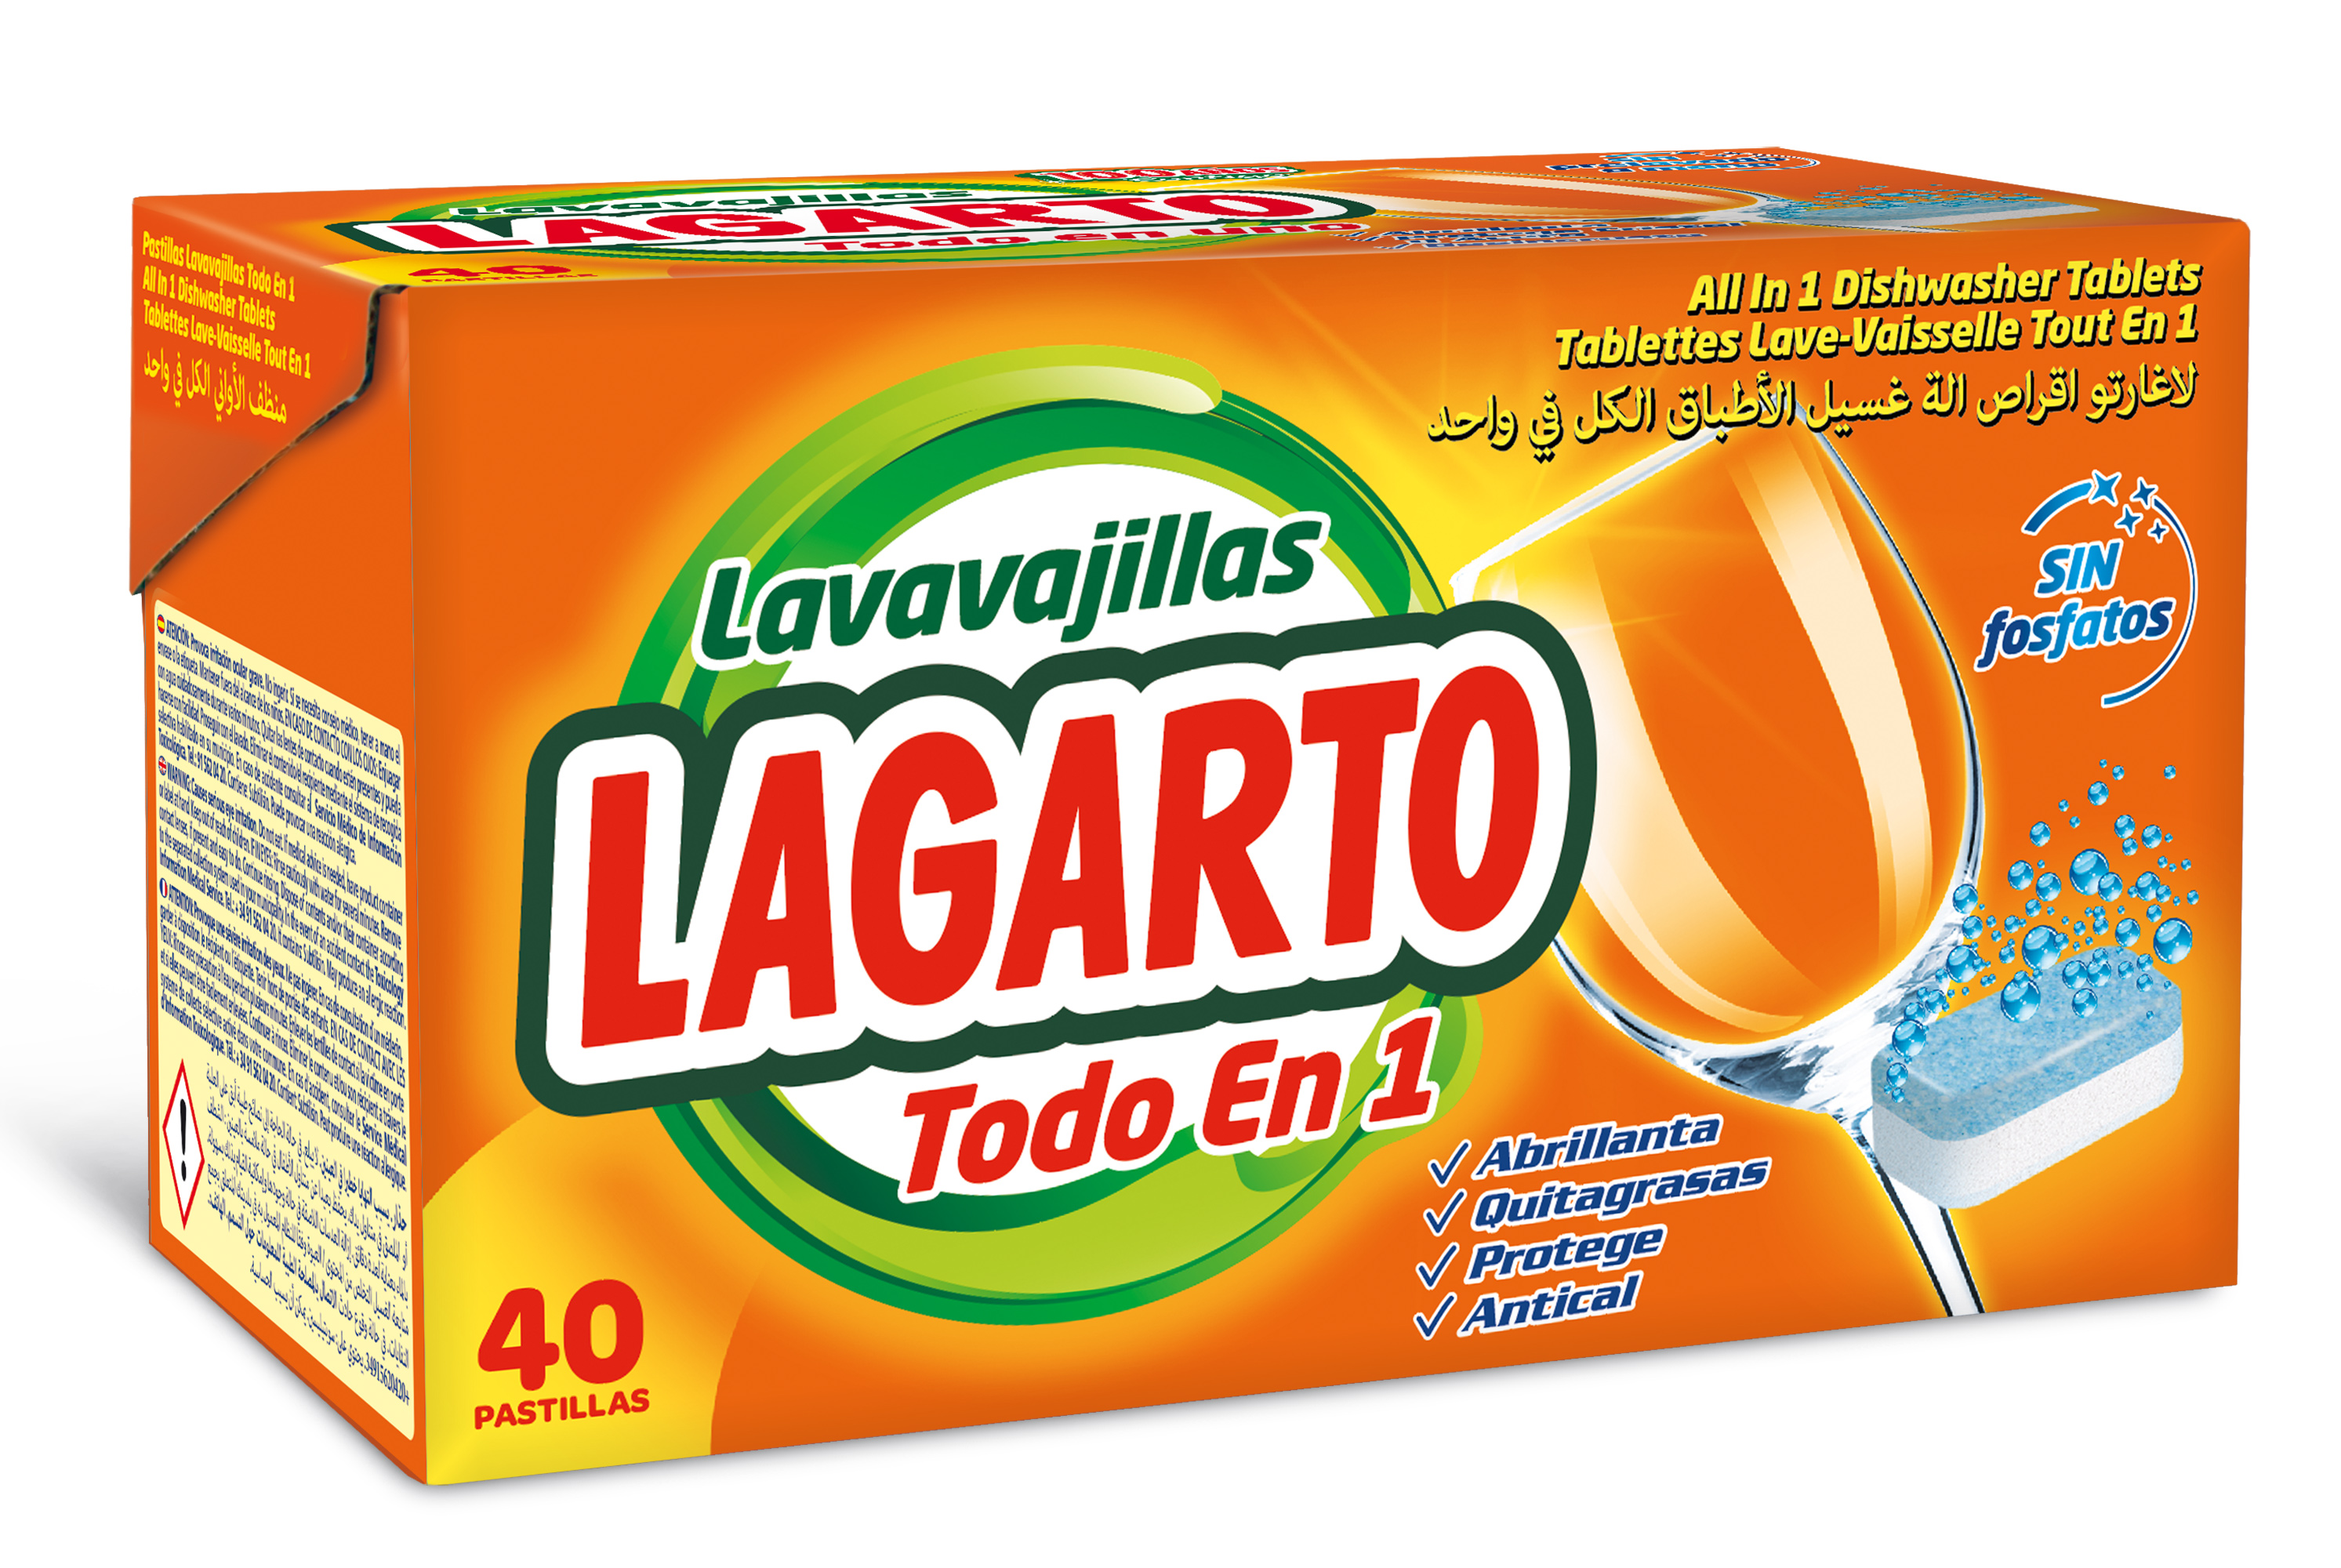 Lagarto dishwasher tablets all-in-one 40 u.